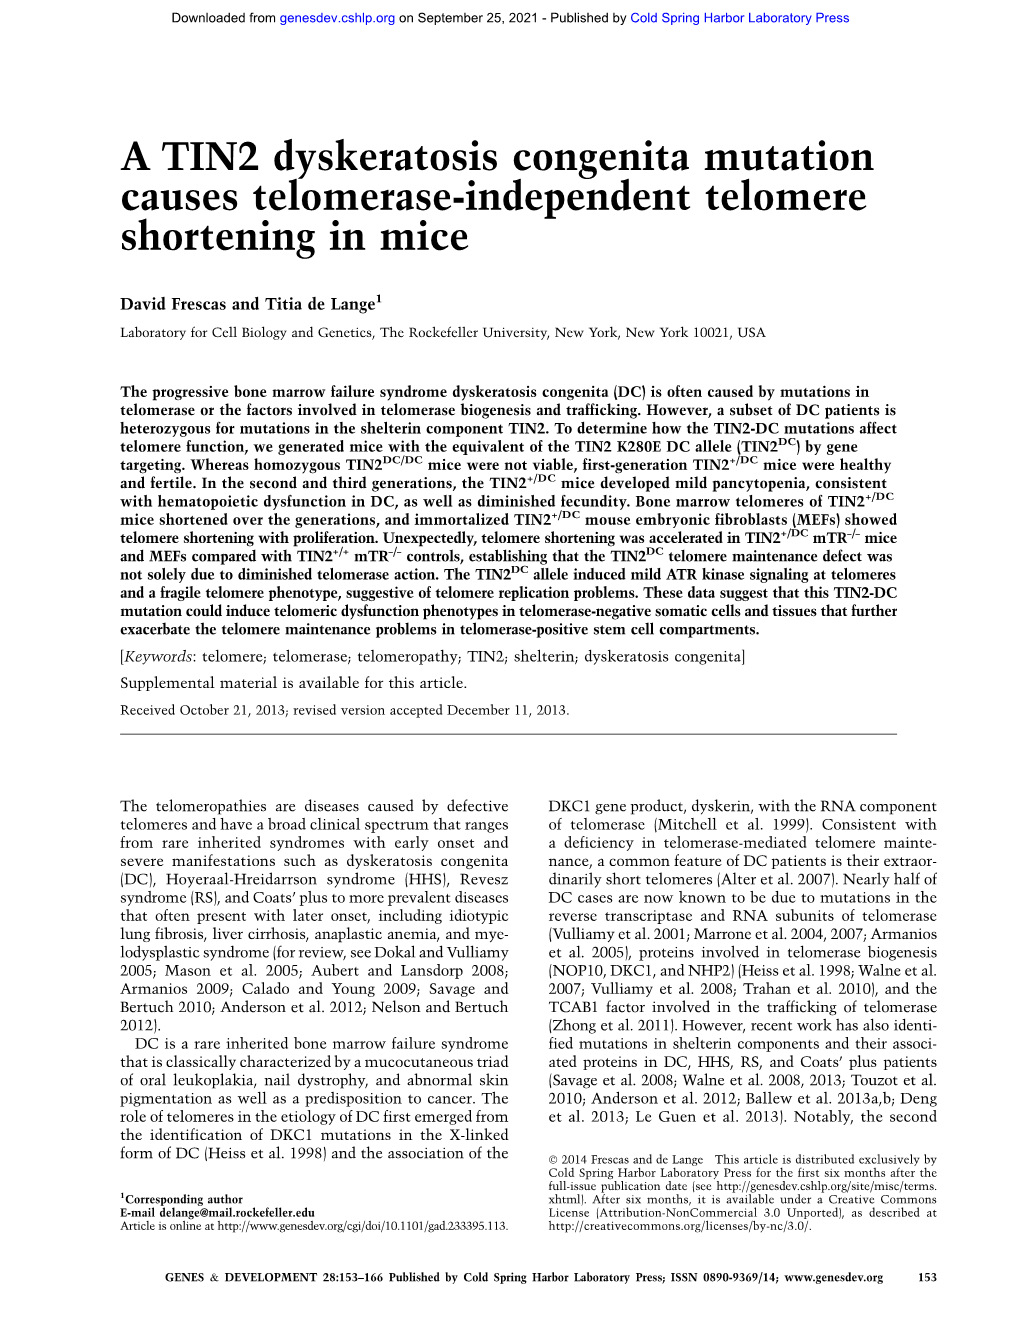 A TIN2 Dyskeratosis Congenita Mutation Causes Telomerase-Independent Telomere Shortening in Mice